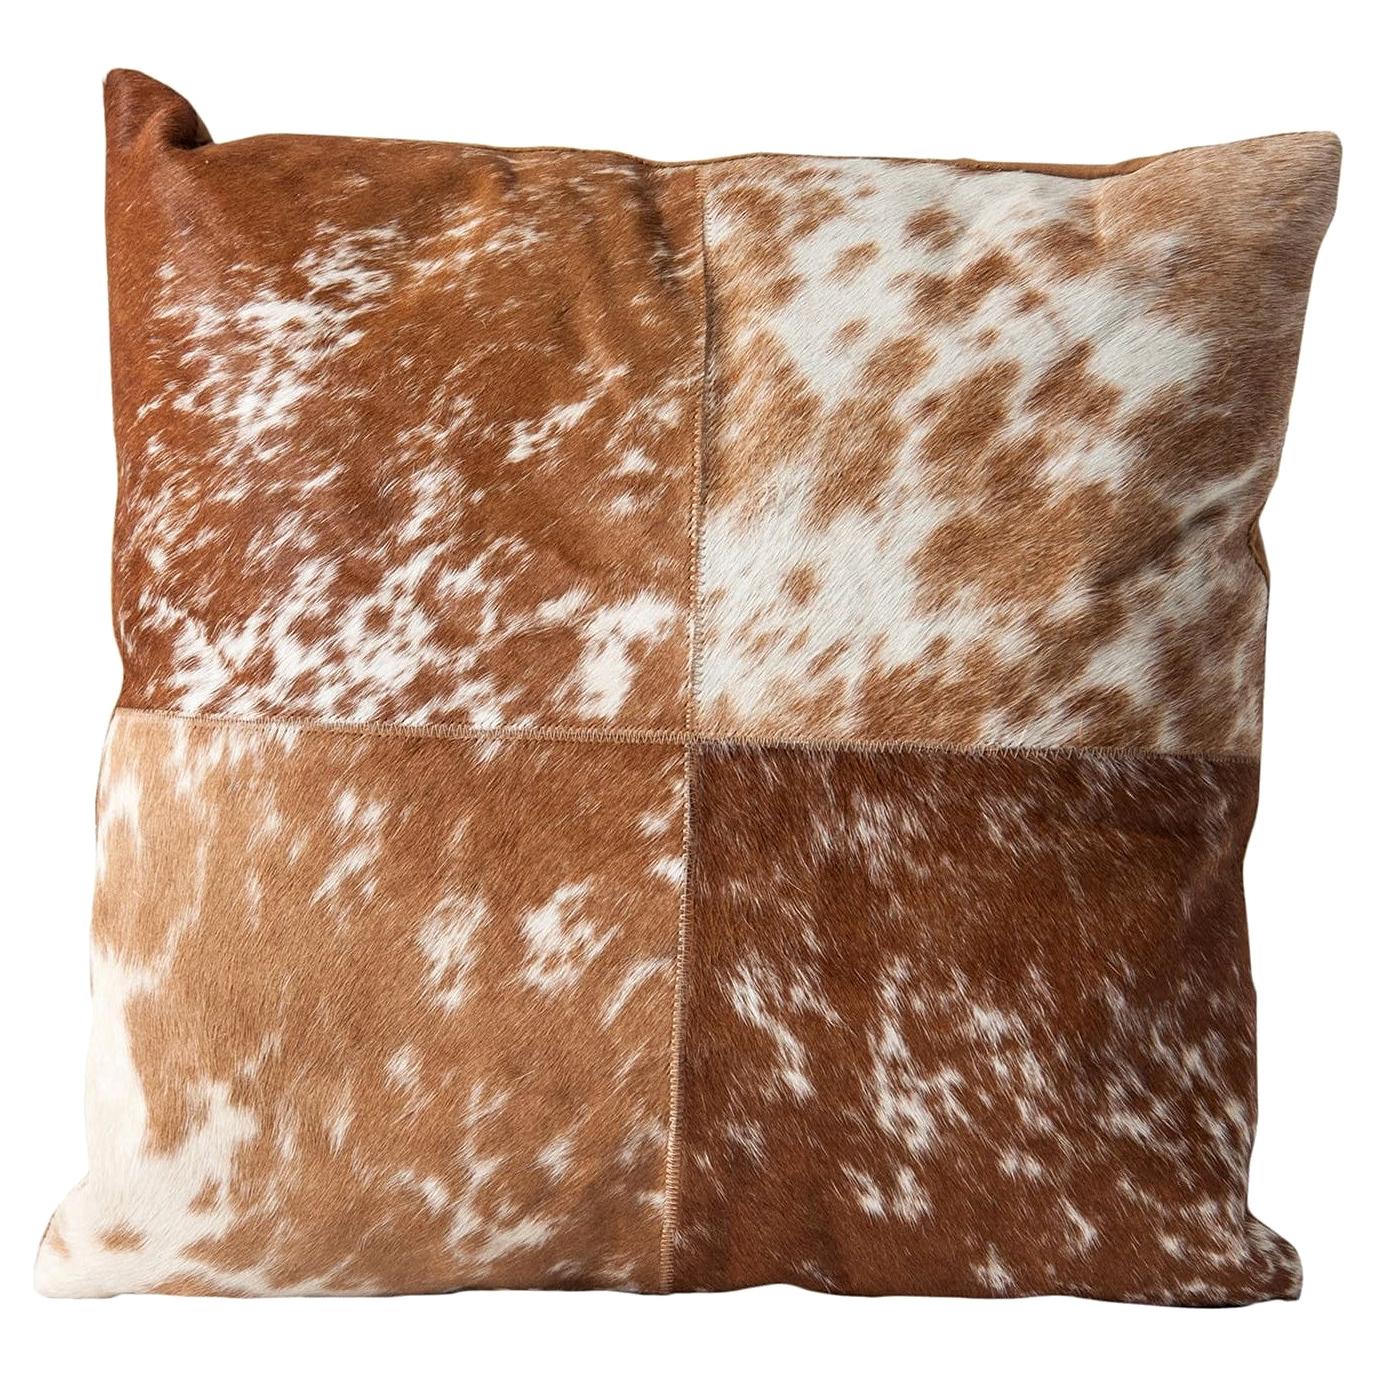 Brown and White Cowhide Cushion